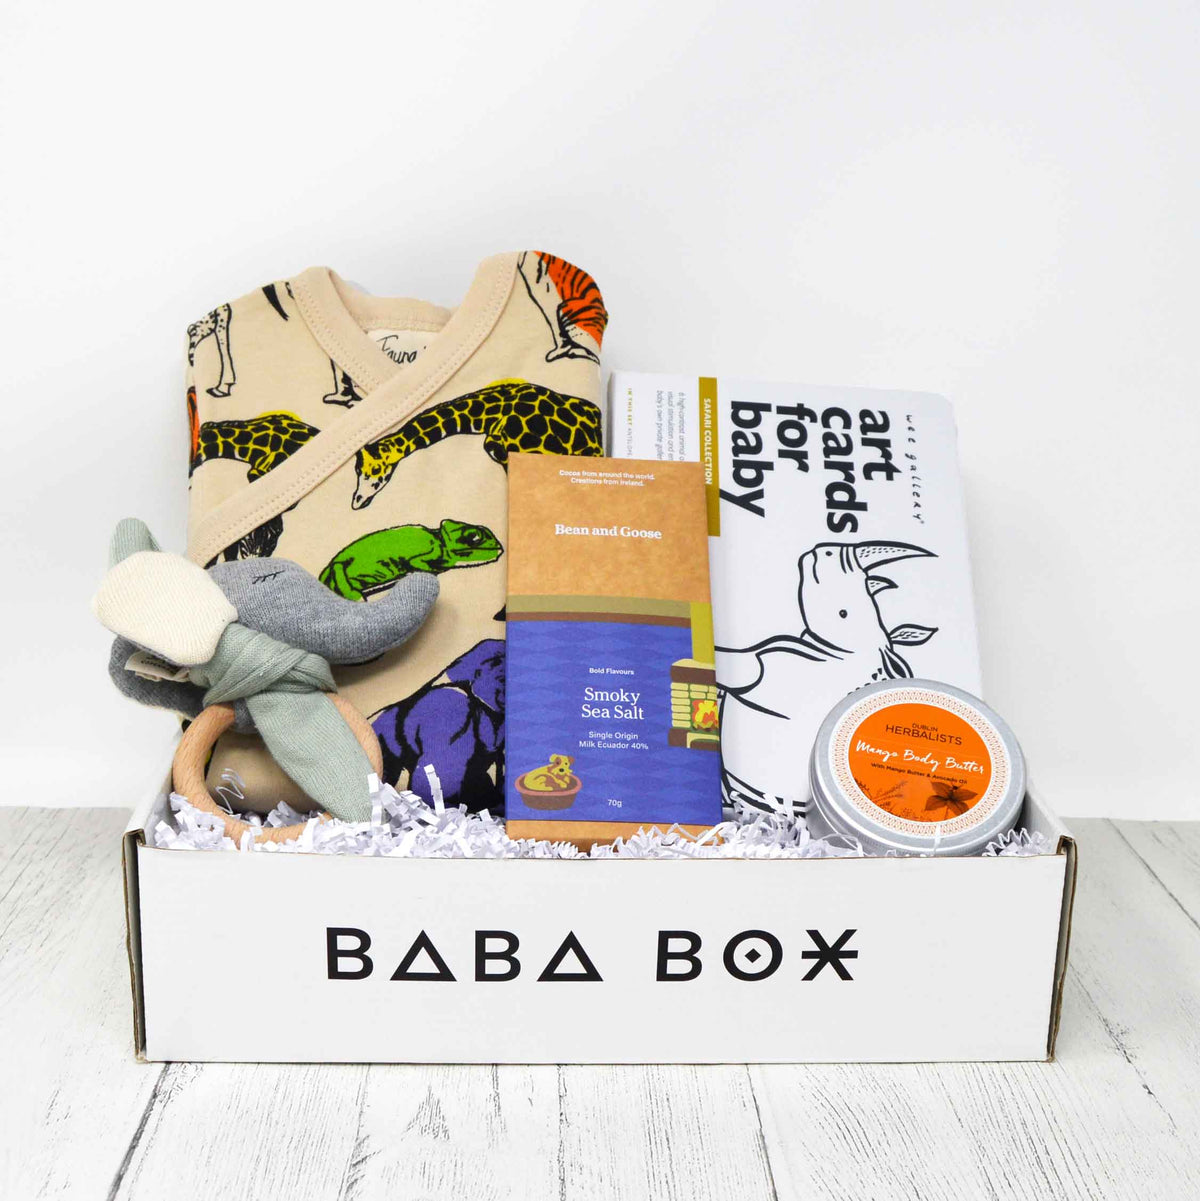 Baba Box - Mum & Baby Safari Gift Box